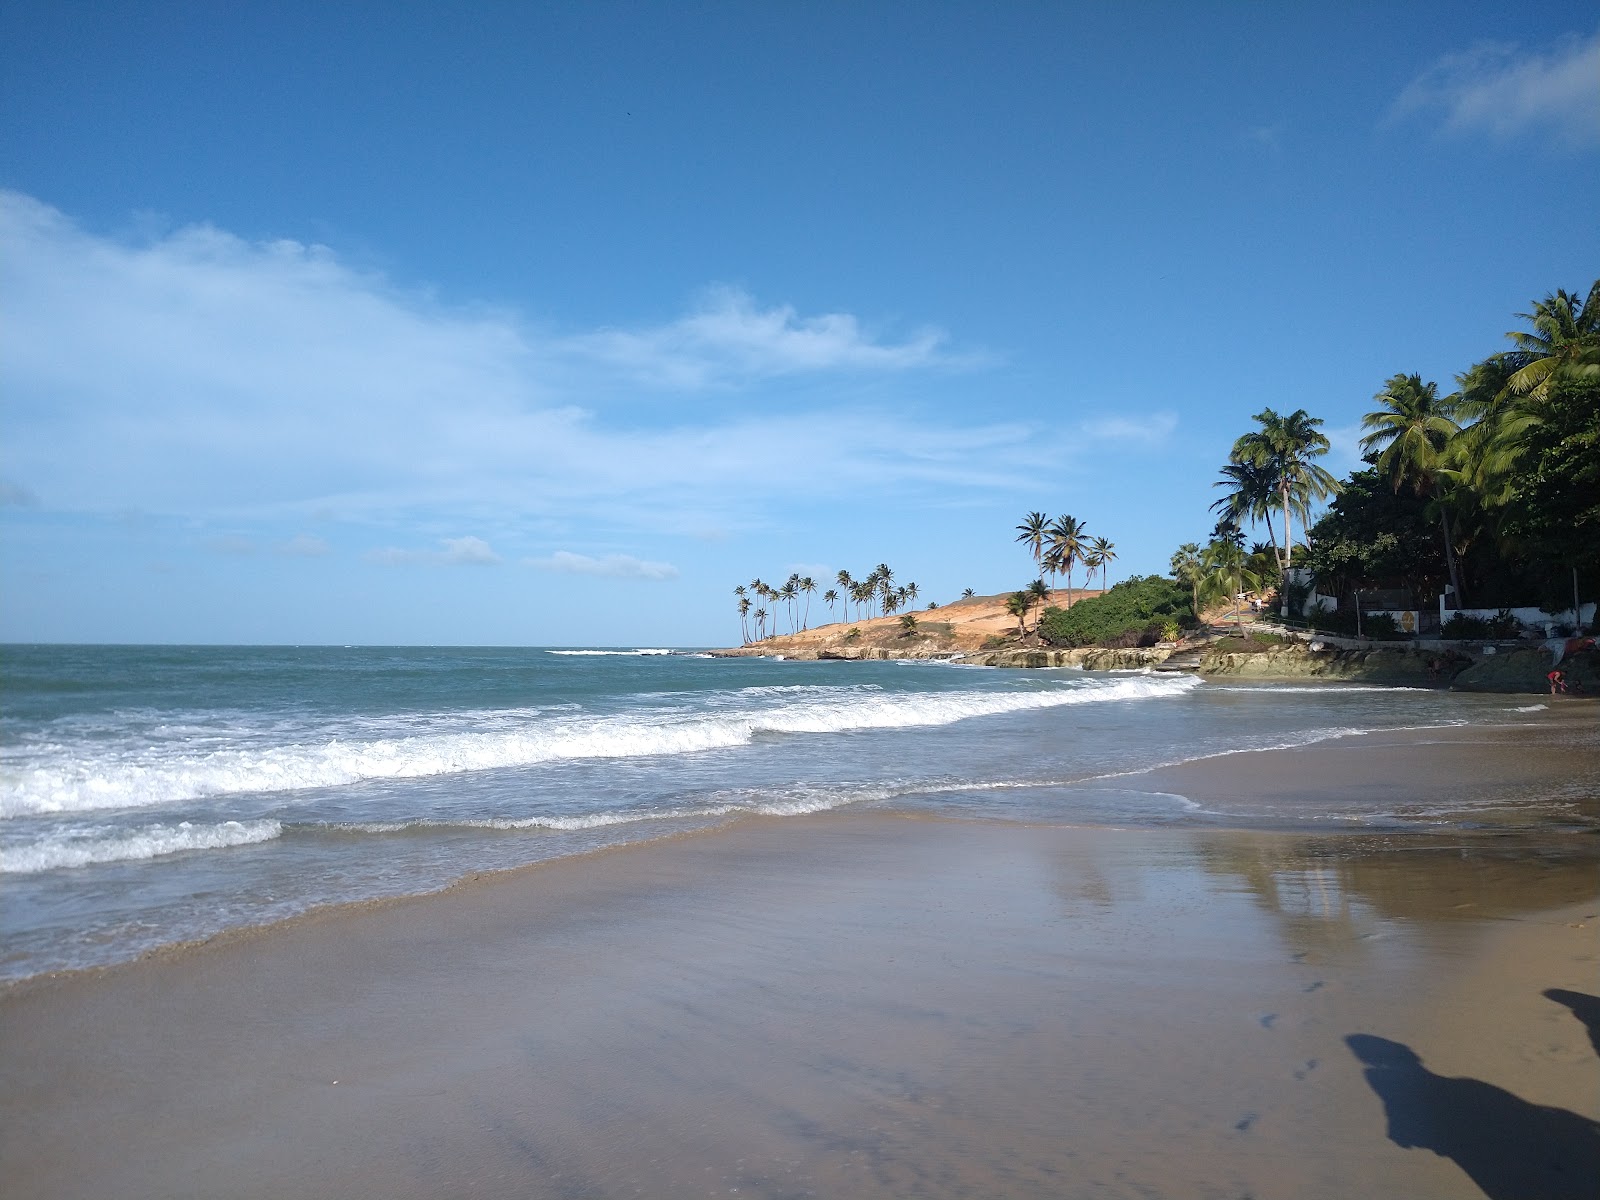 Foto af Praia de Lagoinha faciliteter område